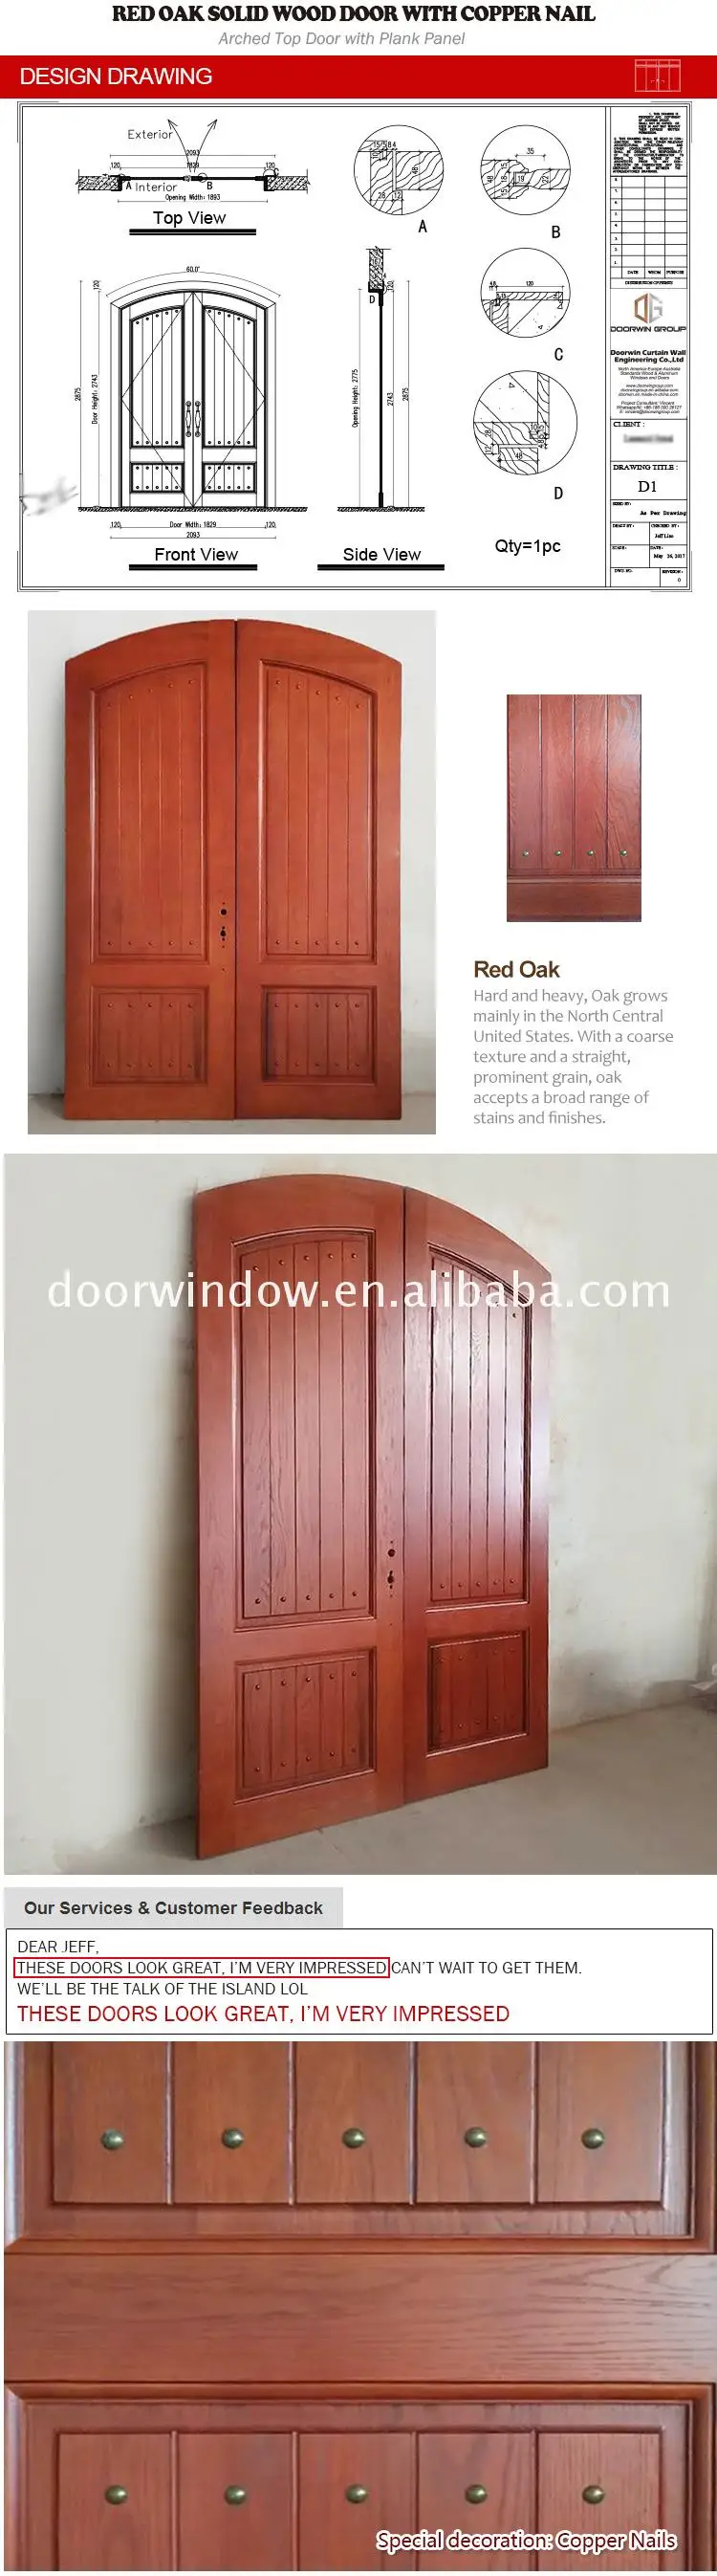 High quality 3 panel interior wood door